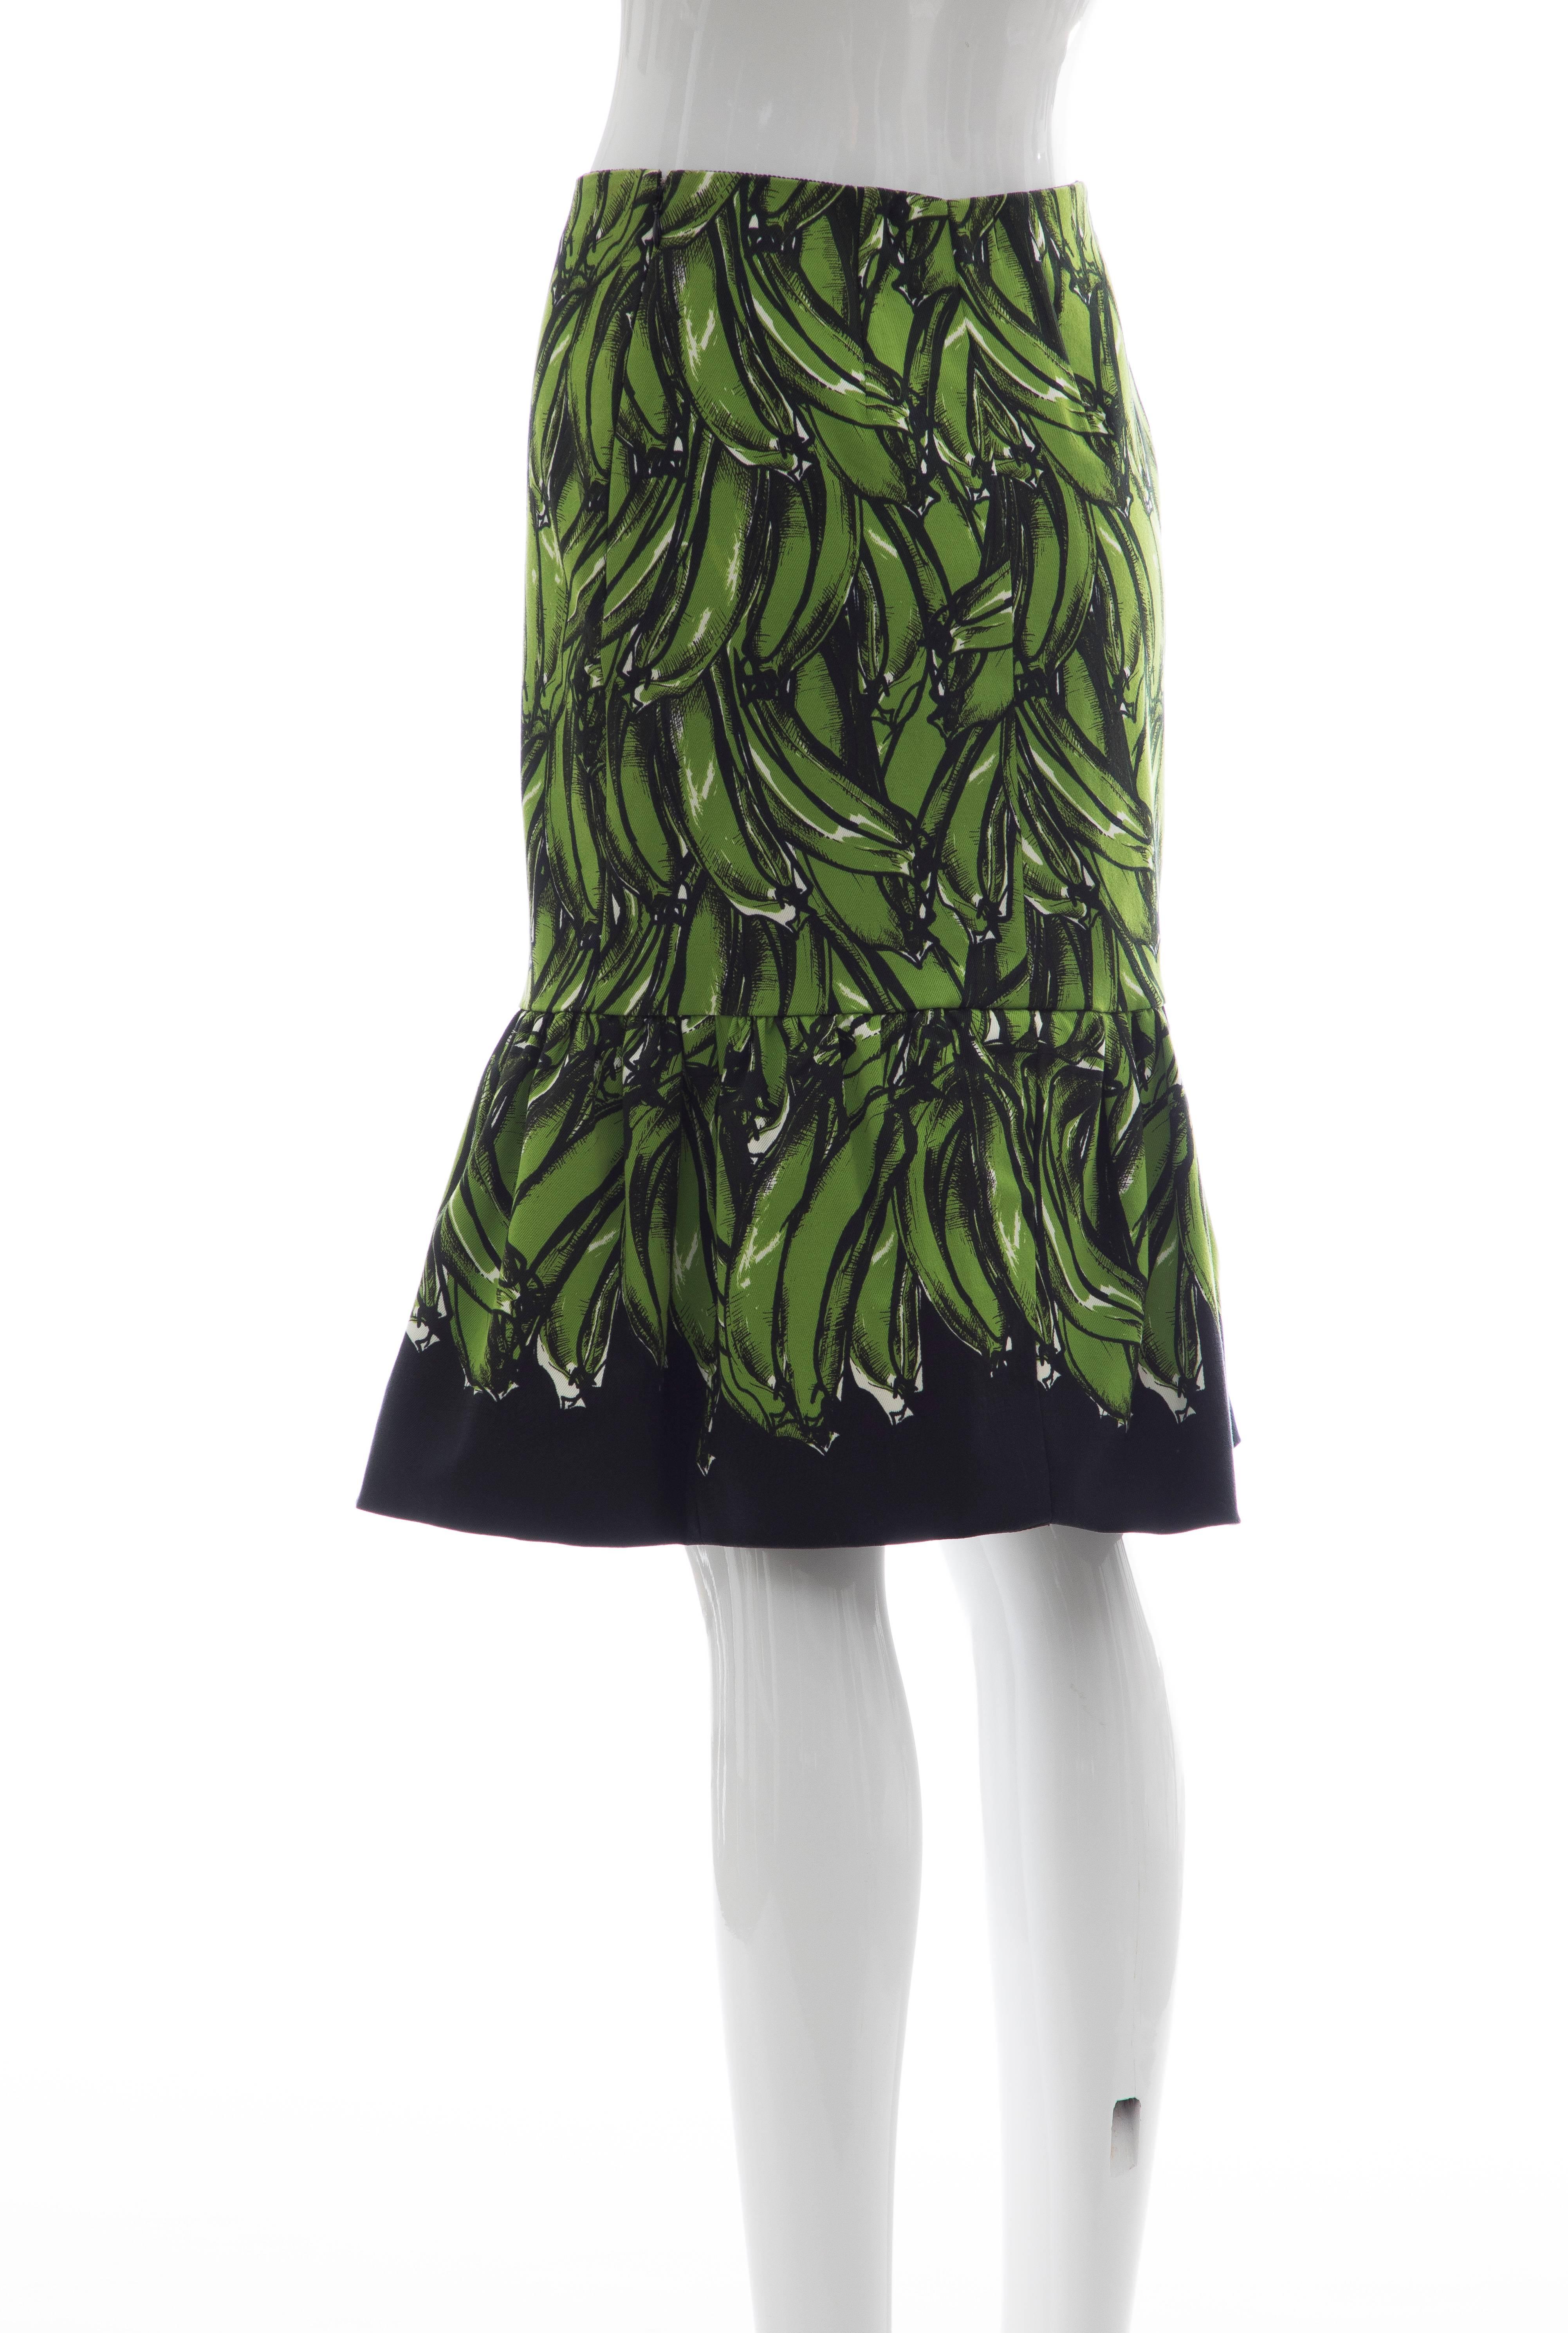 Prada Black Cotton With Green Plantains Print Skirt, Spring - Summer 2011 1